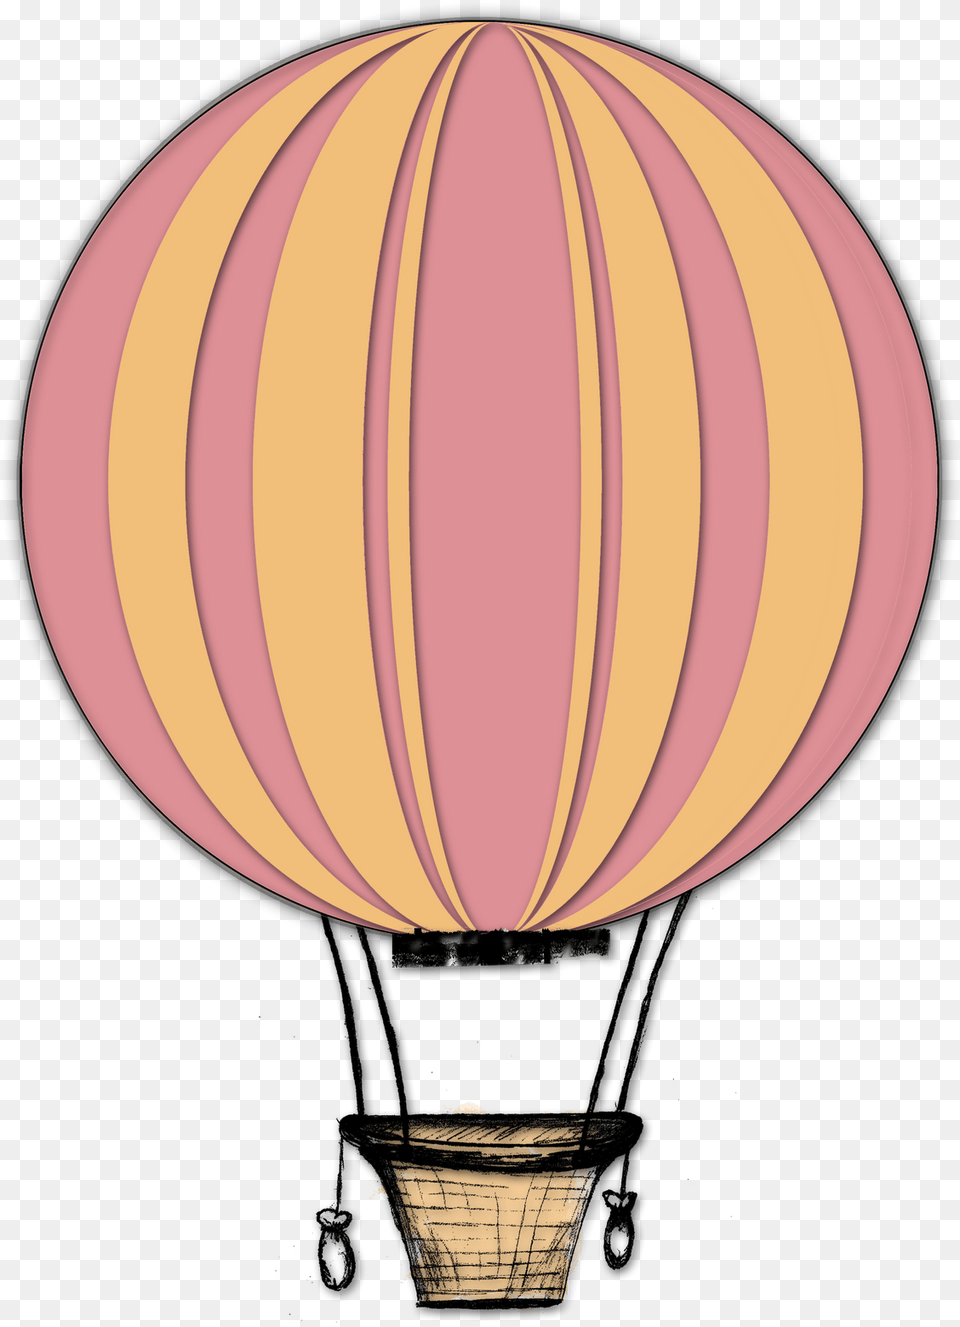 Hot Air Balloon Clipart Images Vintage Hot Air Balloon Clipart, Aircraft, Transportation, Vehicle, Hot Air Balloon Free Png Download